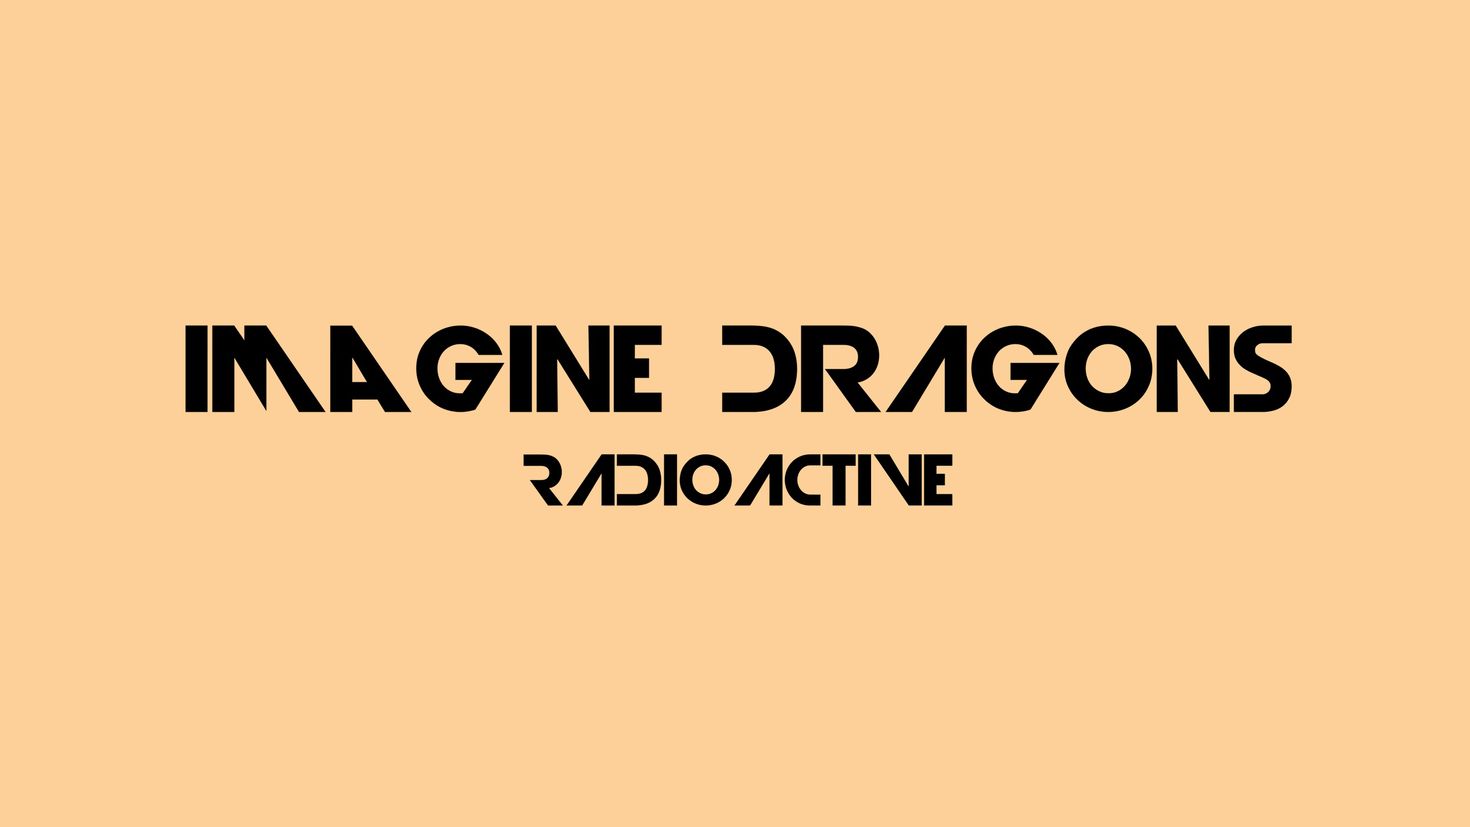 Lonely imagine. Imagine Dragons. Imagine Dragons картинки. Imagine Dragons логотип. Imagine Dragons обои.